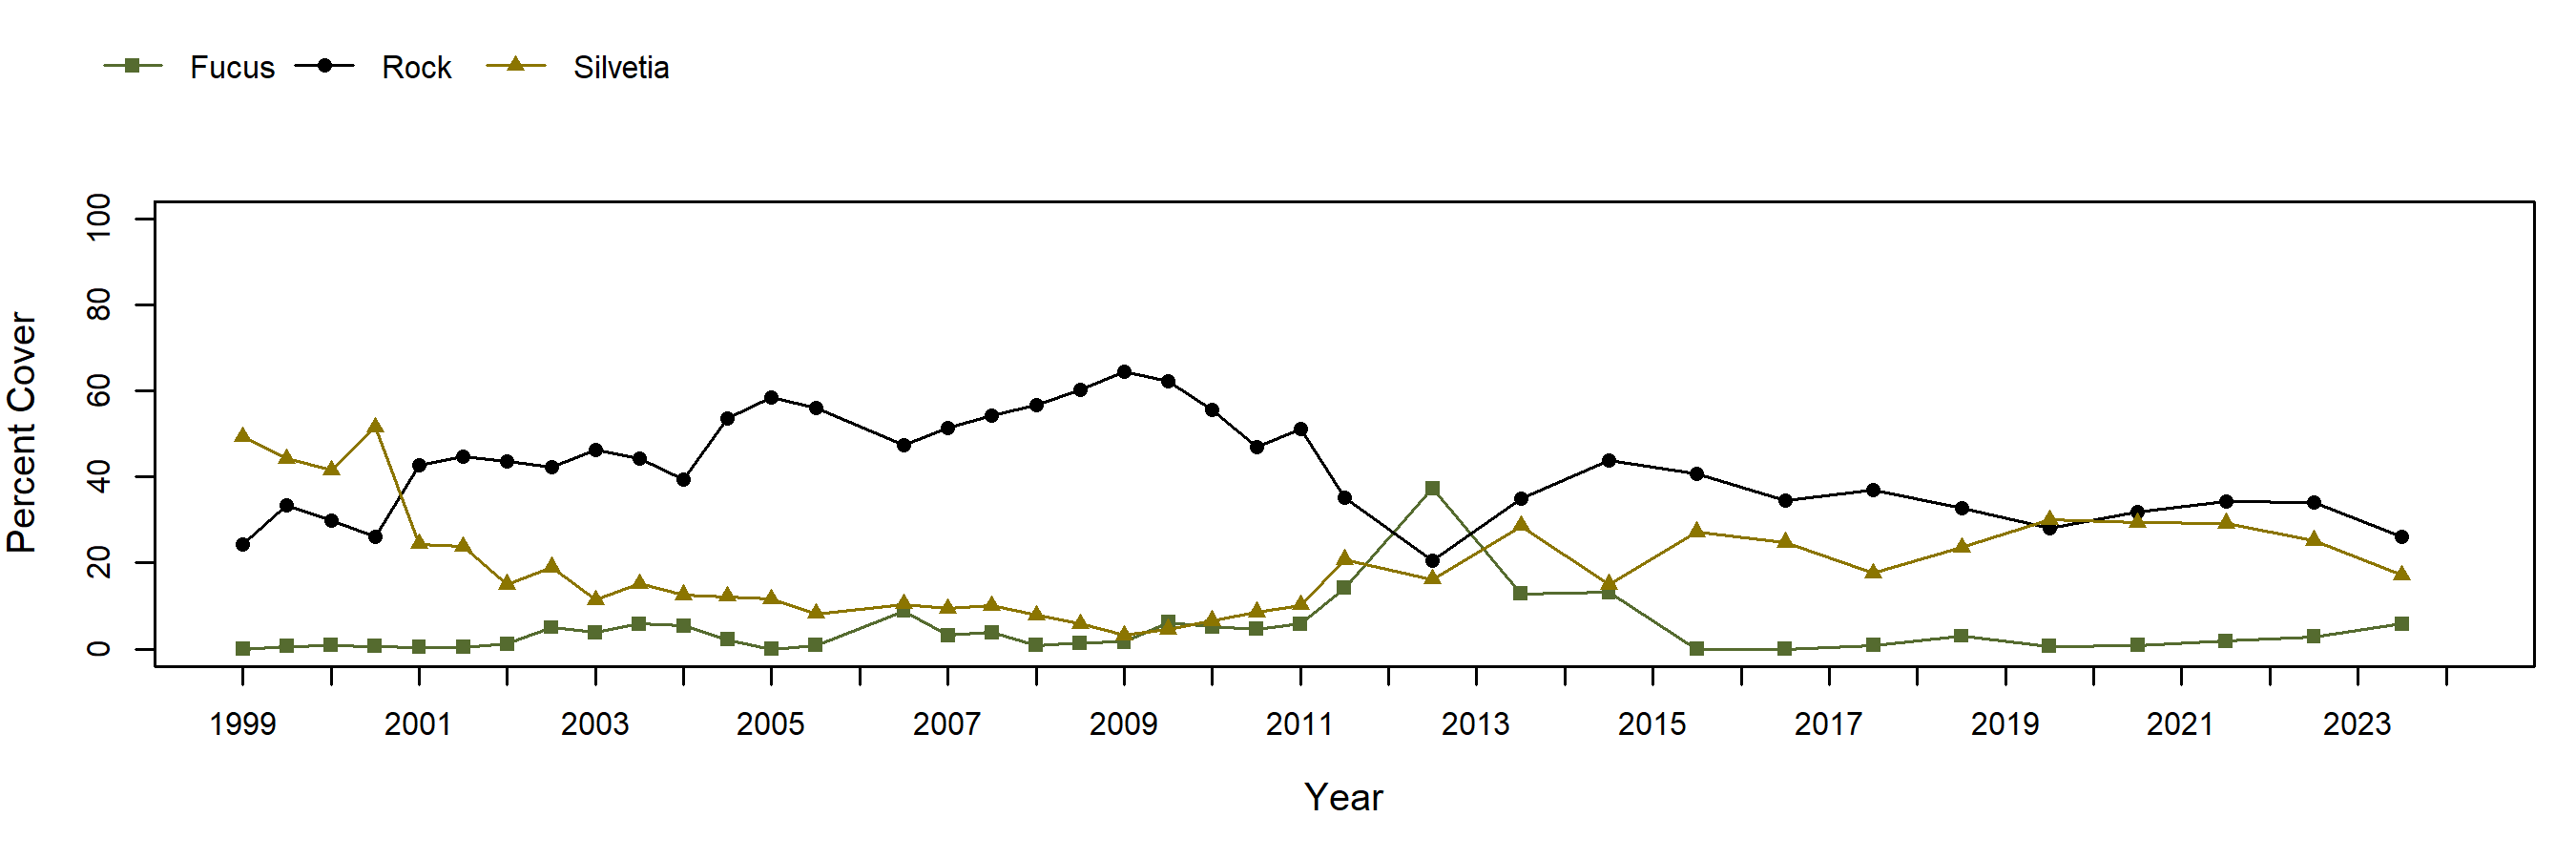 Point Lobos Silvetia trend plot